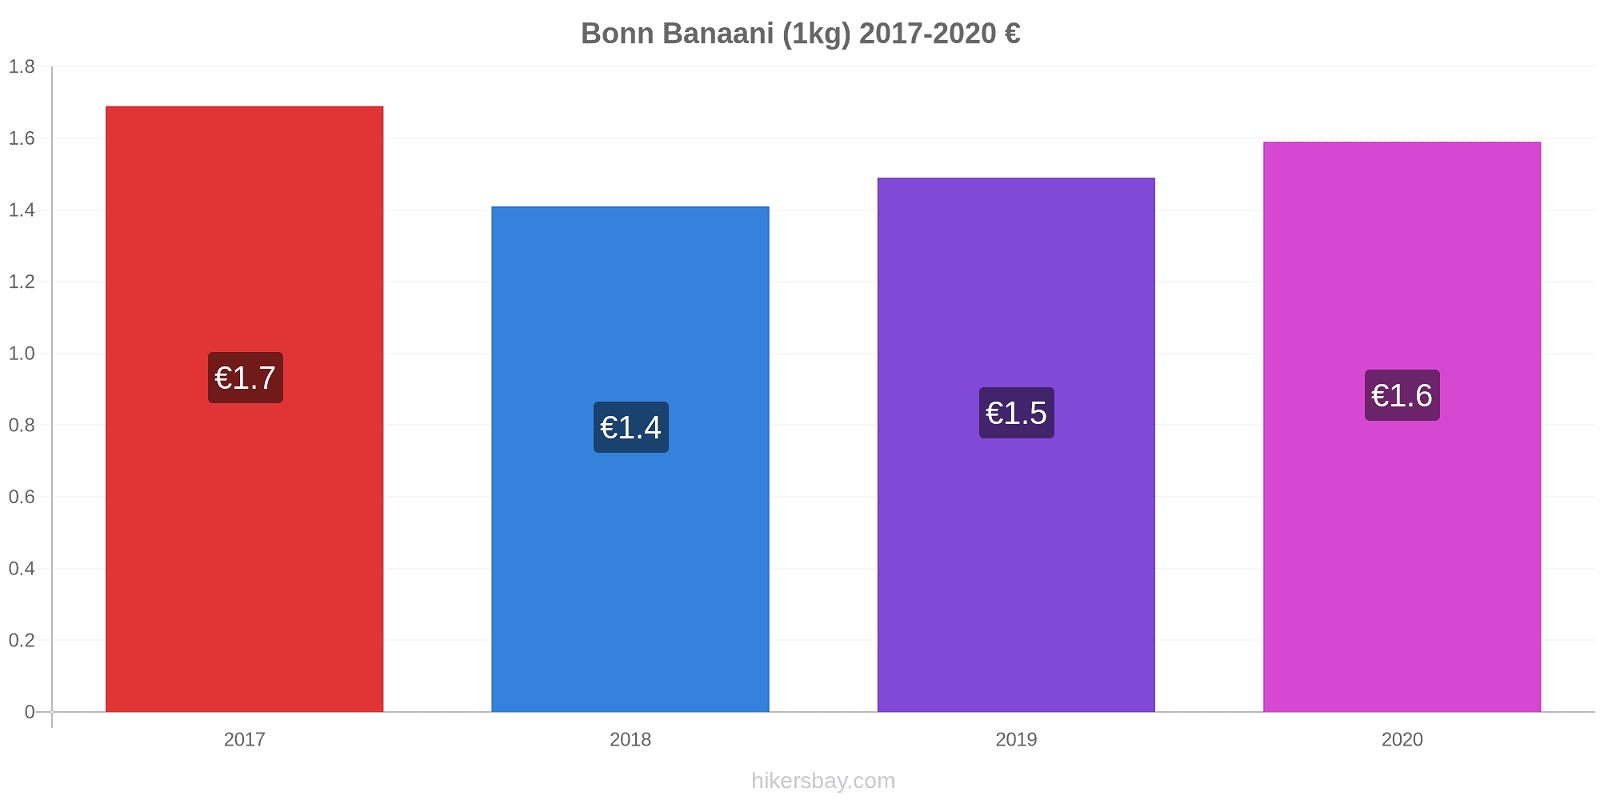 Bonn hintojen muutokset Banaani (1kg) hikersbay.com